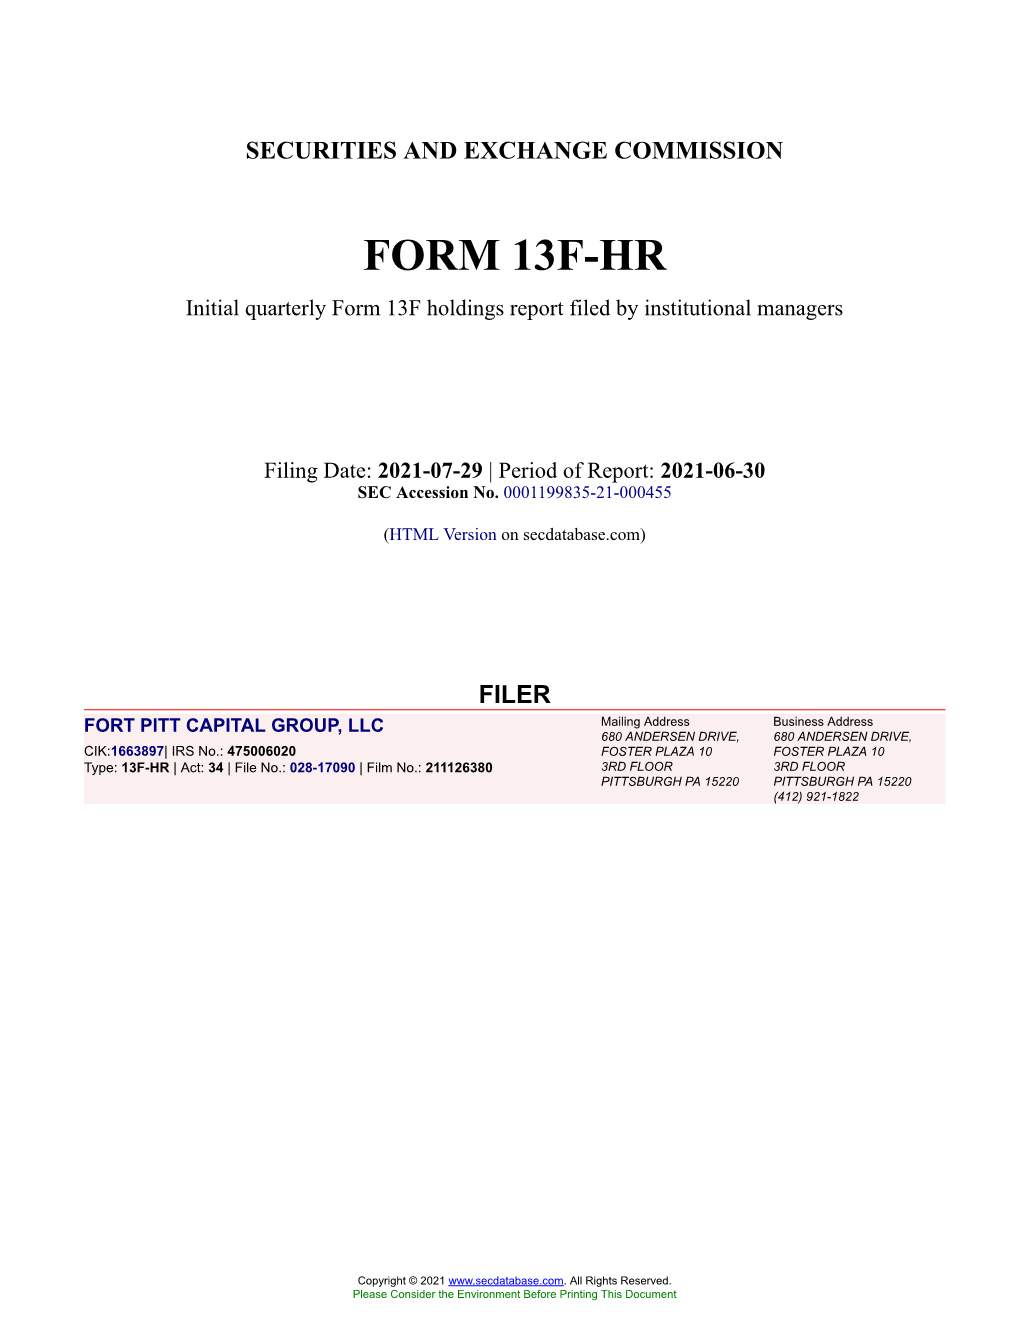 FORT PITT CAPITAL GROUP, LLC Form 13F-HR Filed 2021-07-29